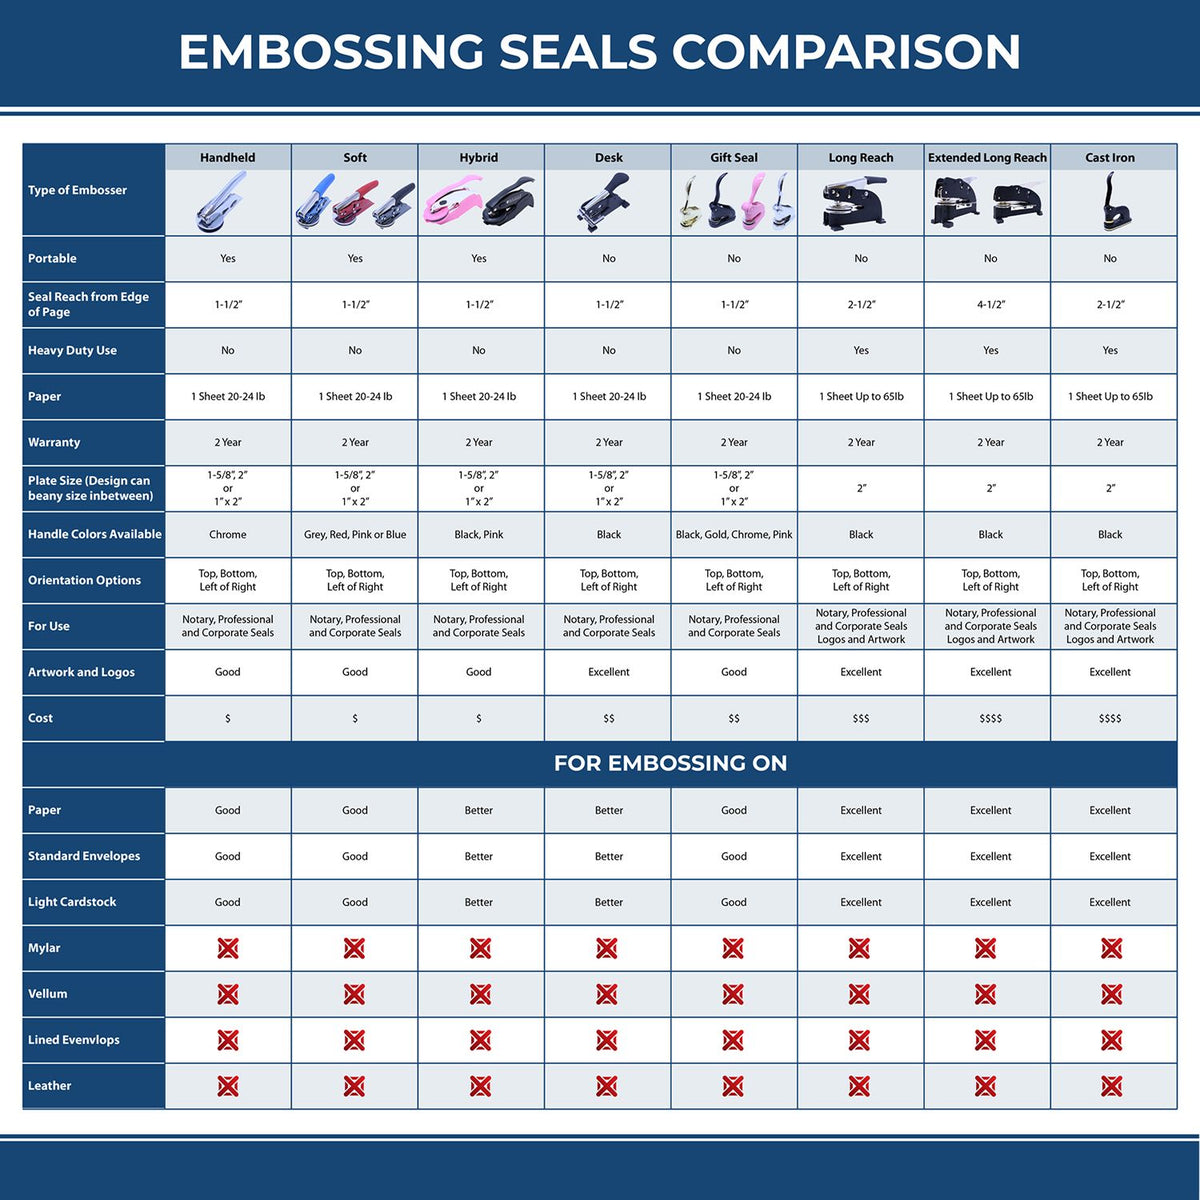 Forester Pink Soft Seal Embosser 3036FOR Embossing Seal Comparison